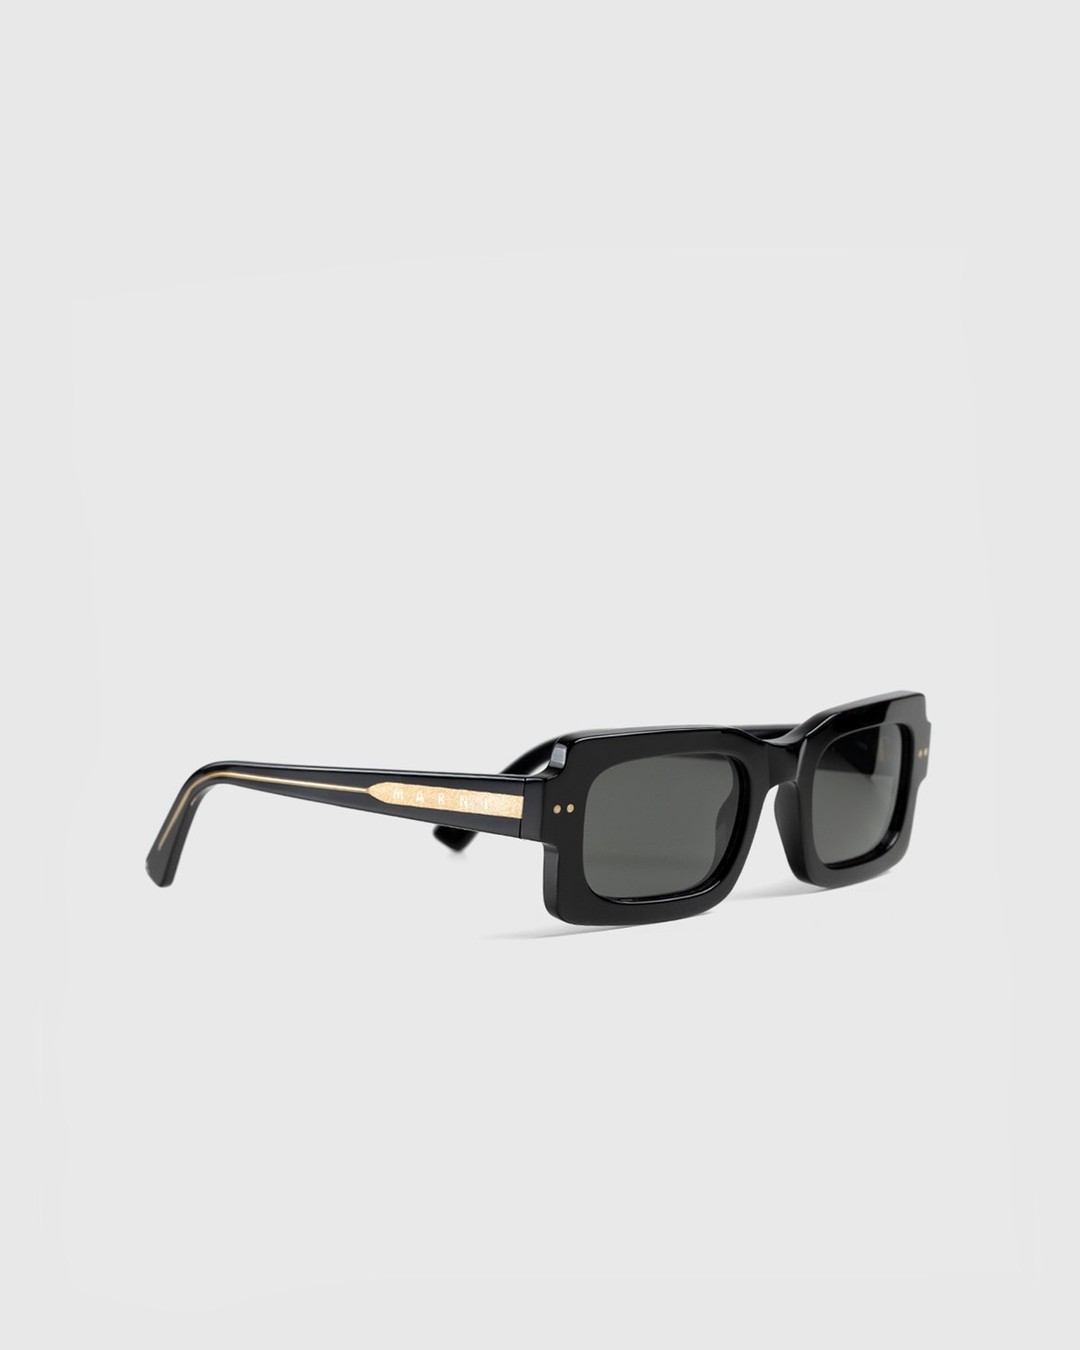 Marni – Lake Vostok Sunglasses Black - Sunglasses - Black - Image 2